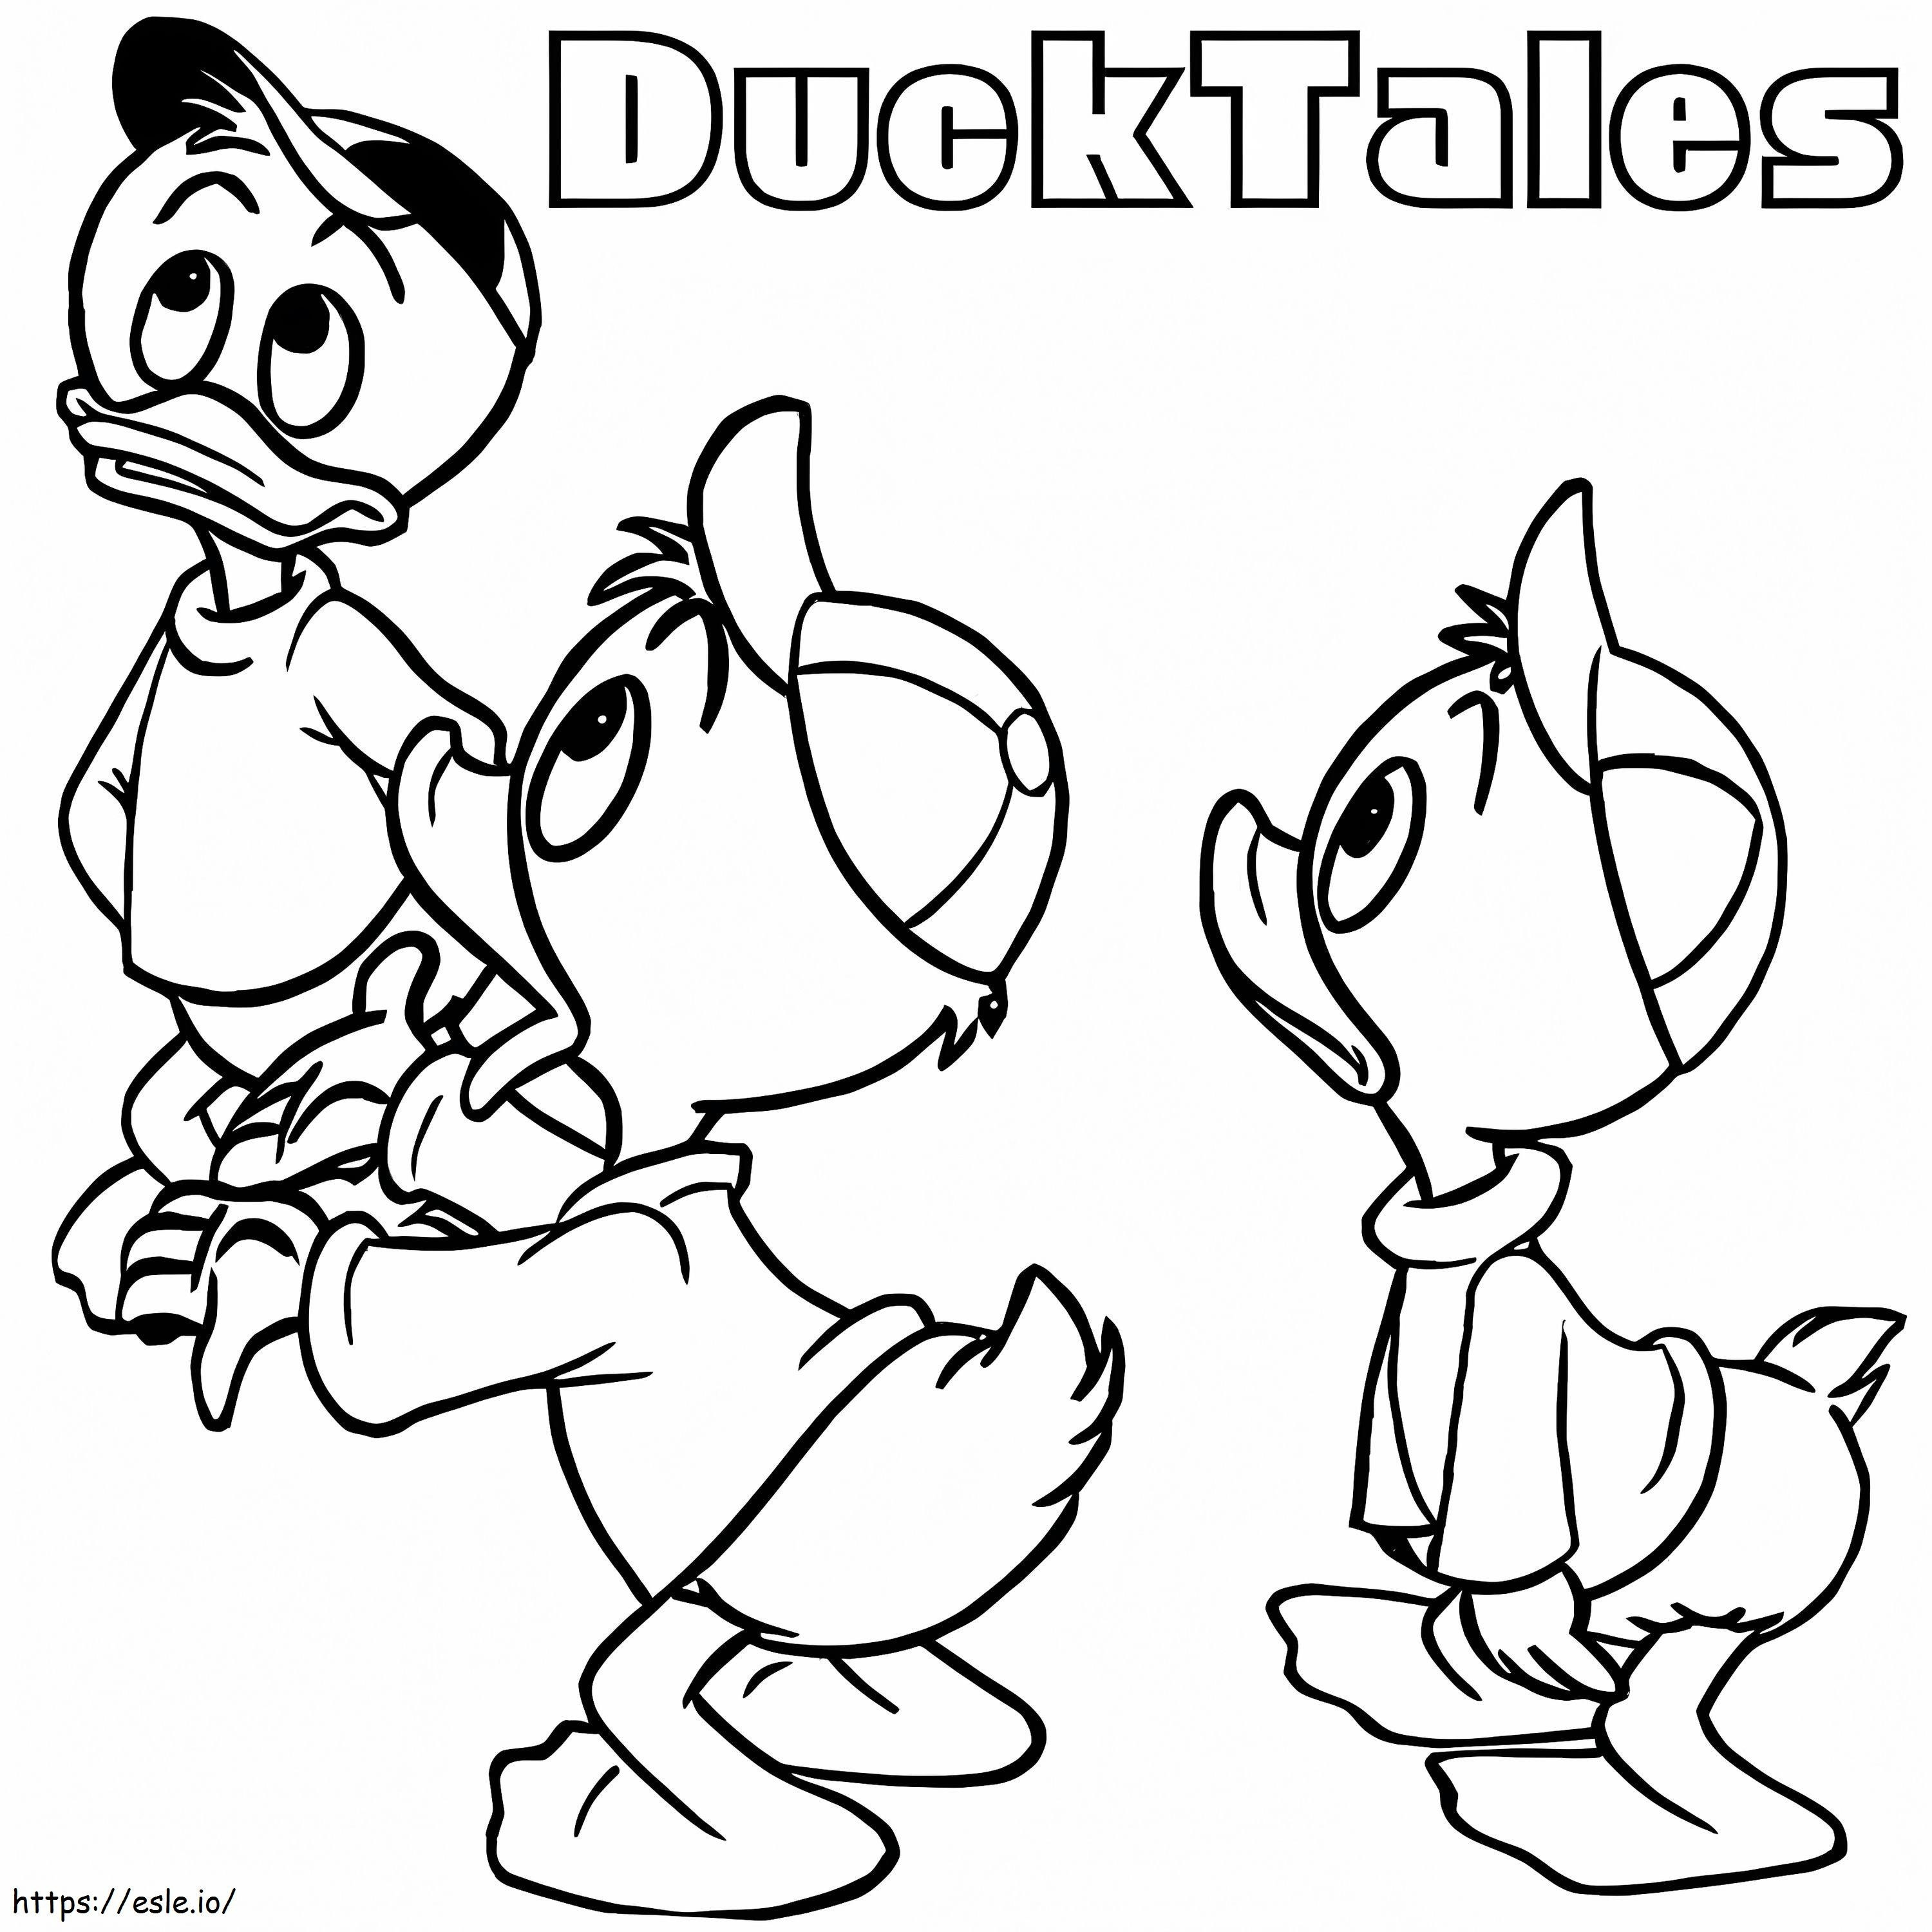 Coloriage Ducktalesden Huey Dewey et Louie à imprimer dessin